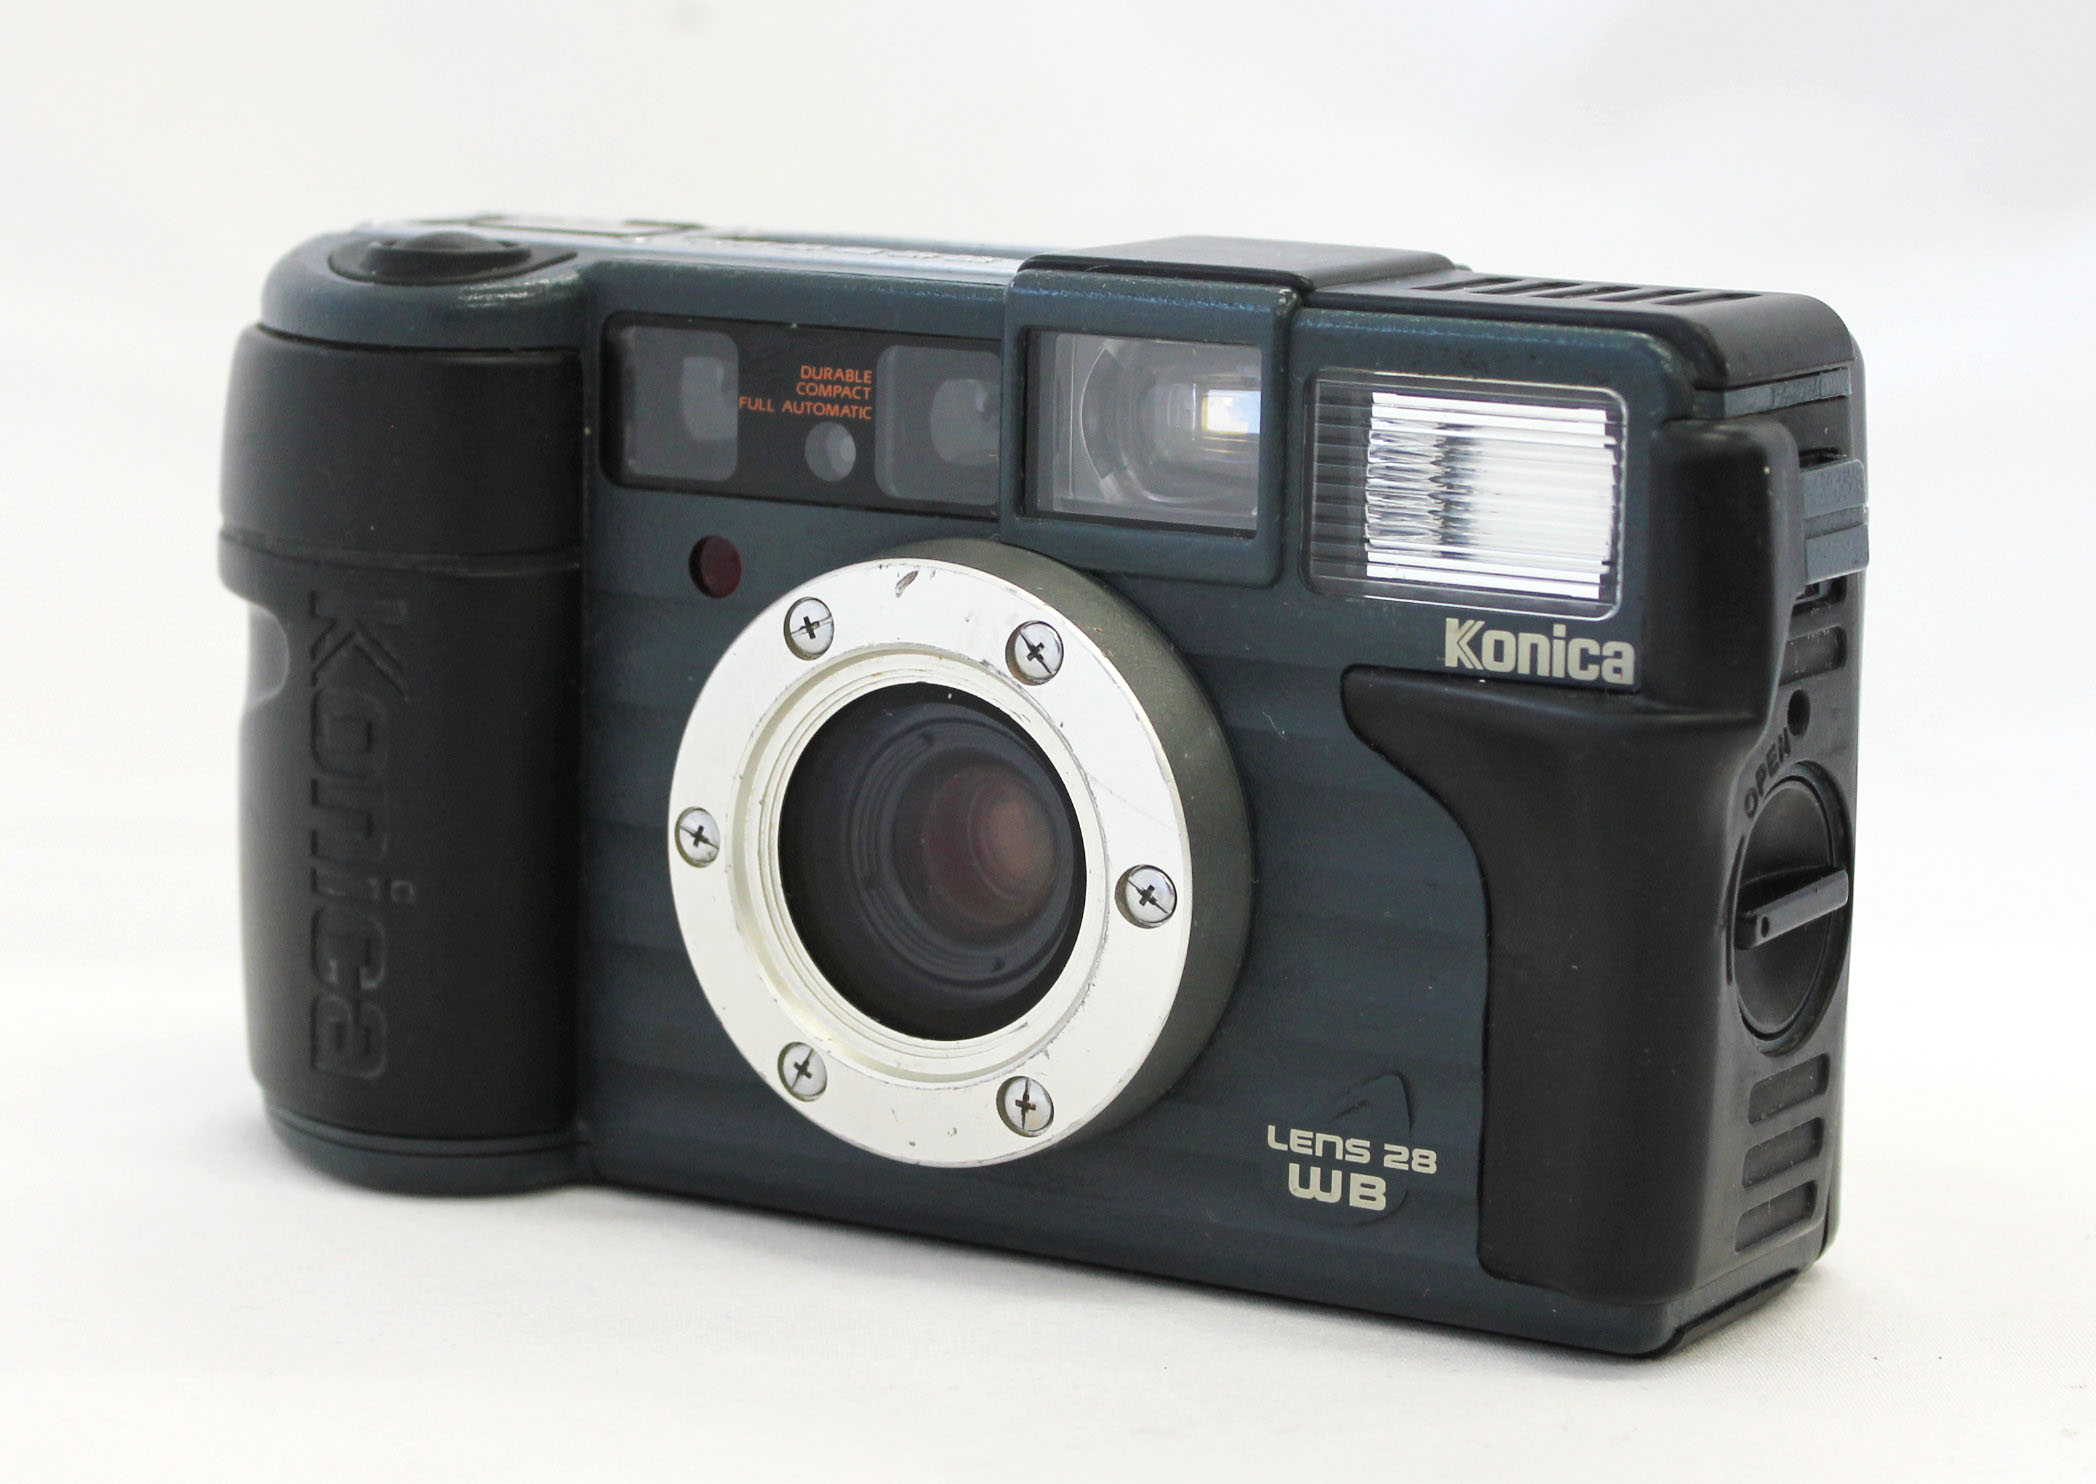 Japan Used Camera Shop | Konica Genba Kantoku Site Supervisor 28WB 35mm Film Camera from Japan